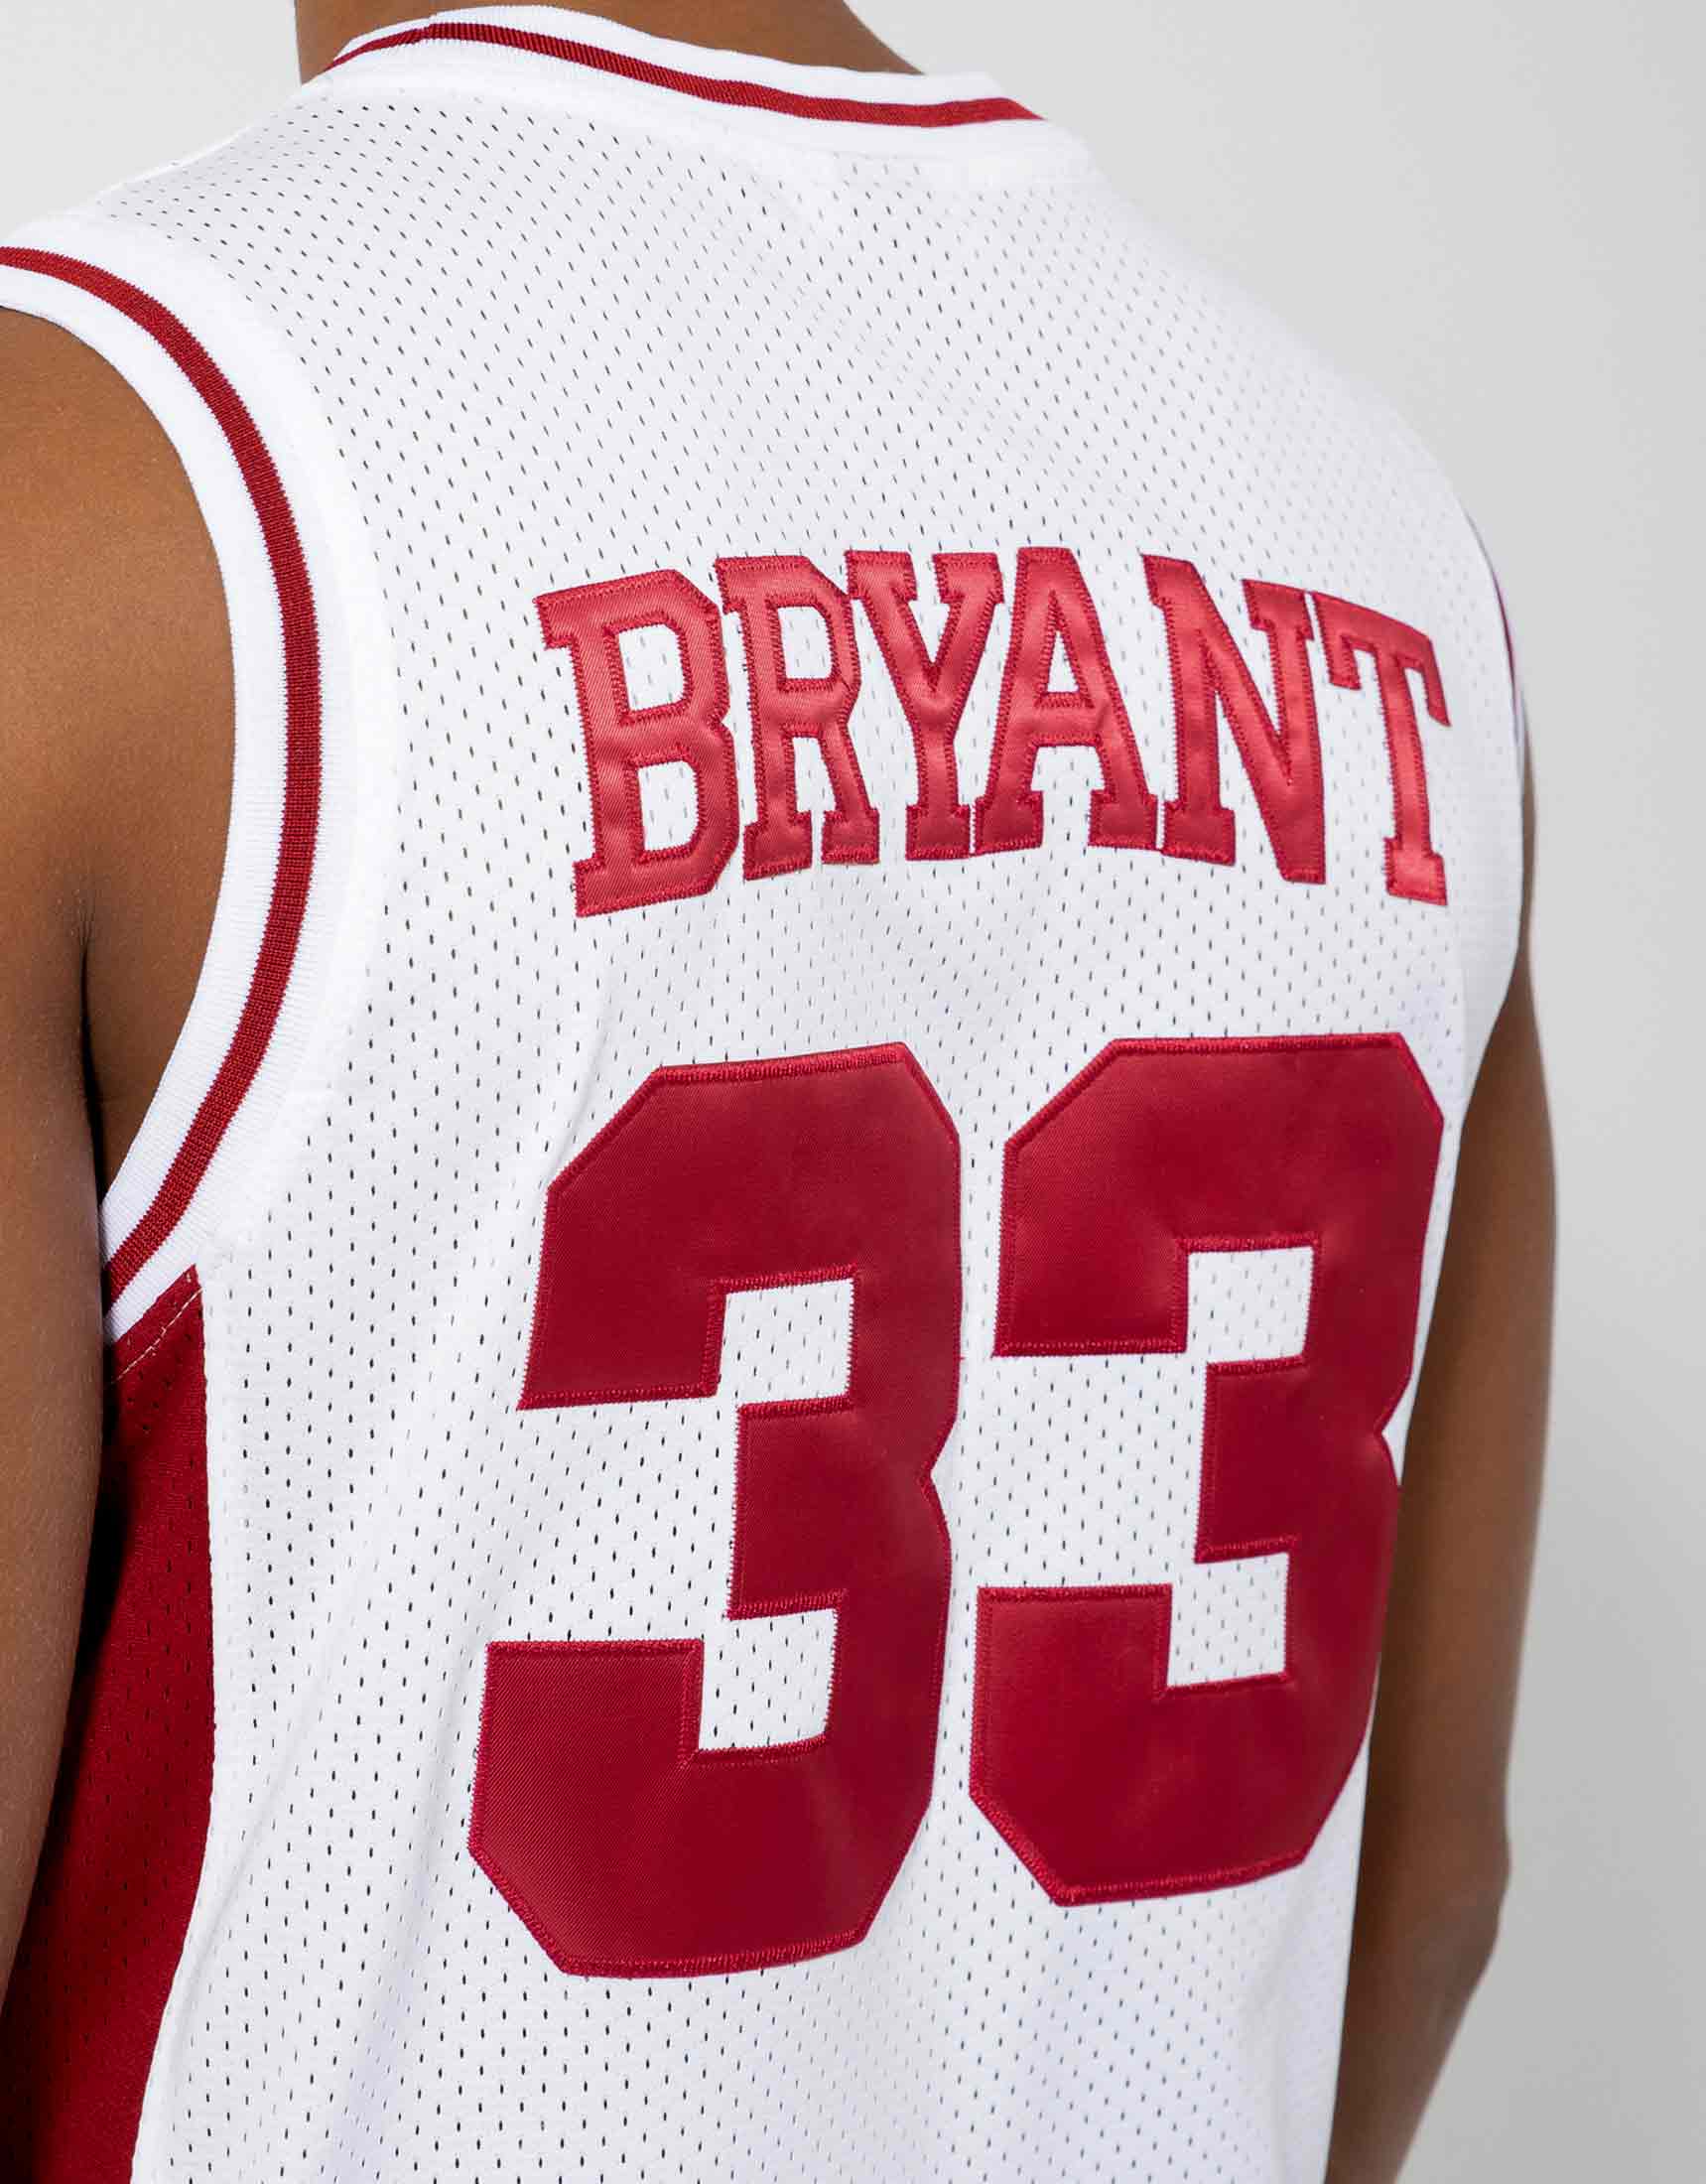 Kobe Bryant #33 Lower Merion High School Jersey  School jersey, Kobe bryant,  Kobe bryant high school